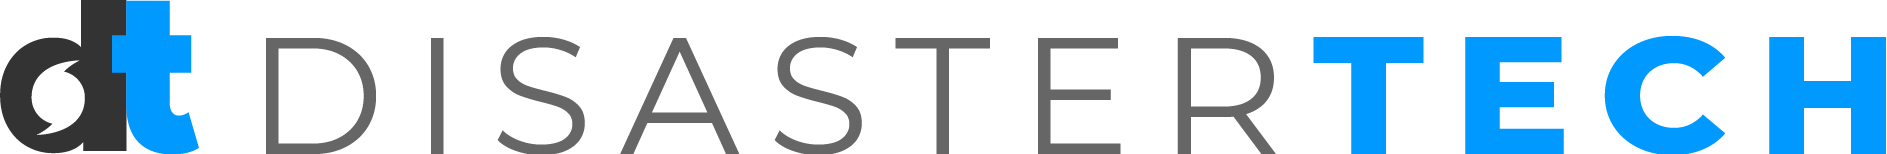 dt-logo-2.0-2a-RGB